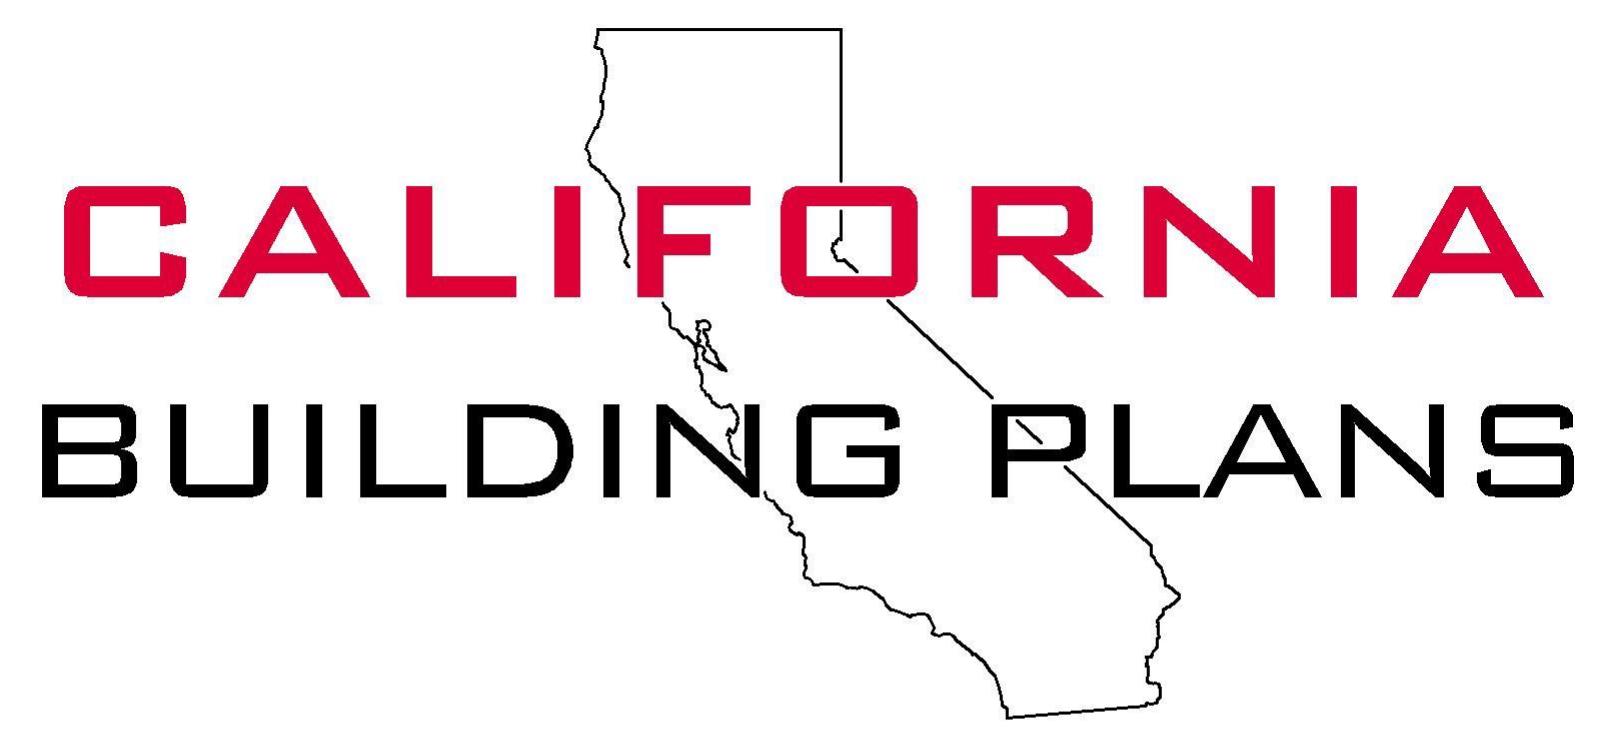 California Building Plans Logo